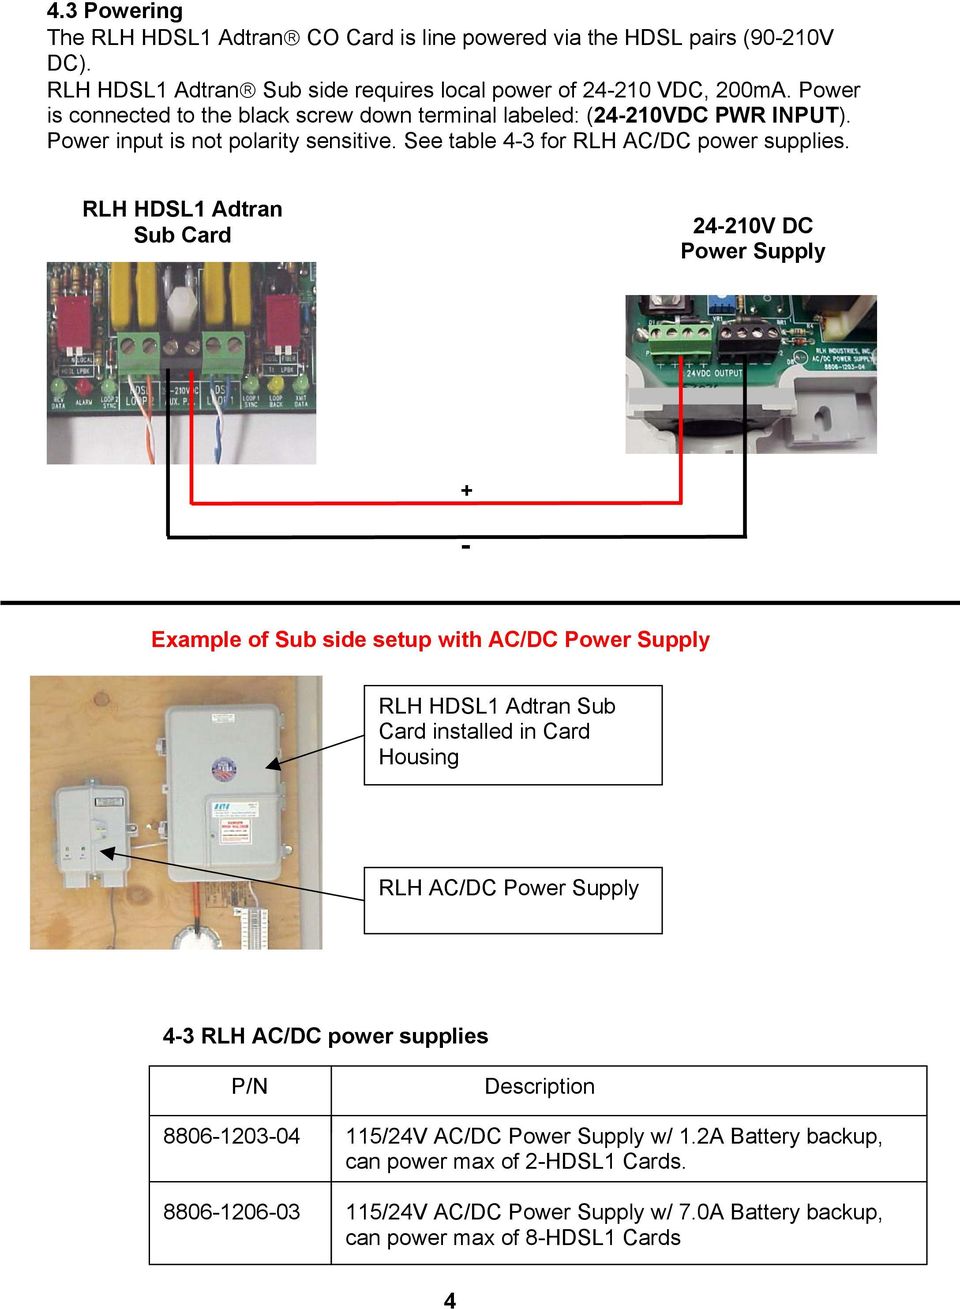 RLH HDSL1 Adtran Sub Card 24-210V DC Power Supply + - Example of Sub side setup with AC/DC Power Supply RLH HDSL1 Adtran Sub Card installed in Card Housing RLH AC/DC Power Supply 4-3